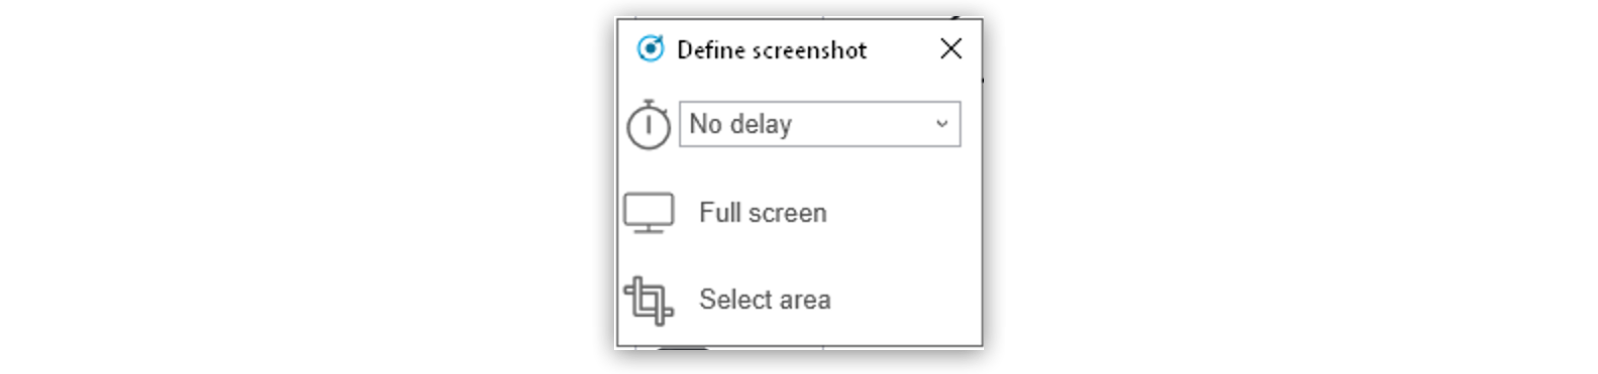 Define Screenshot window